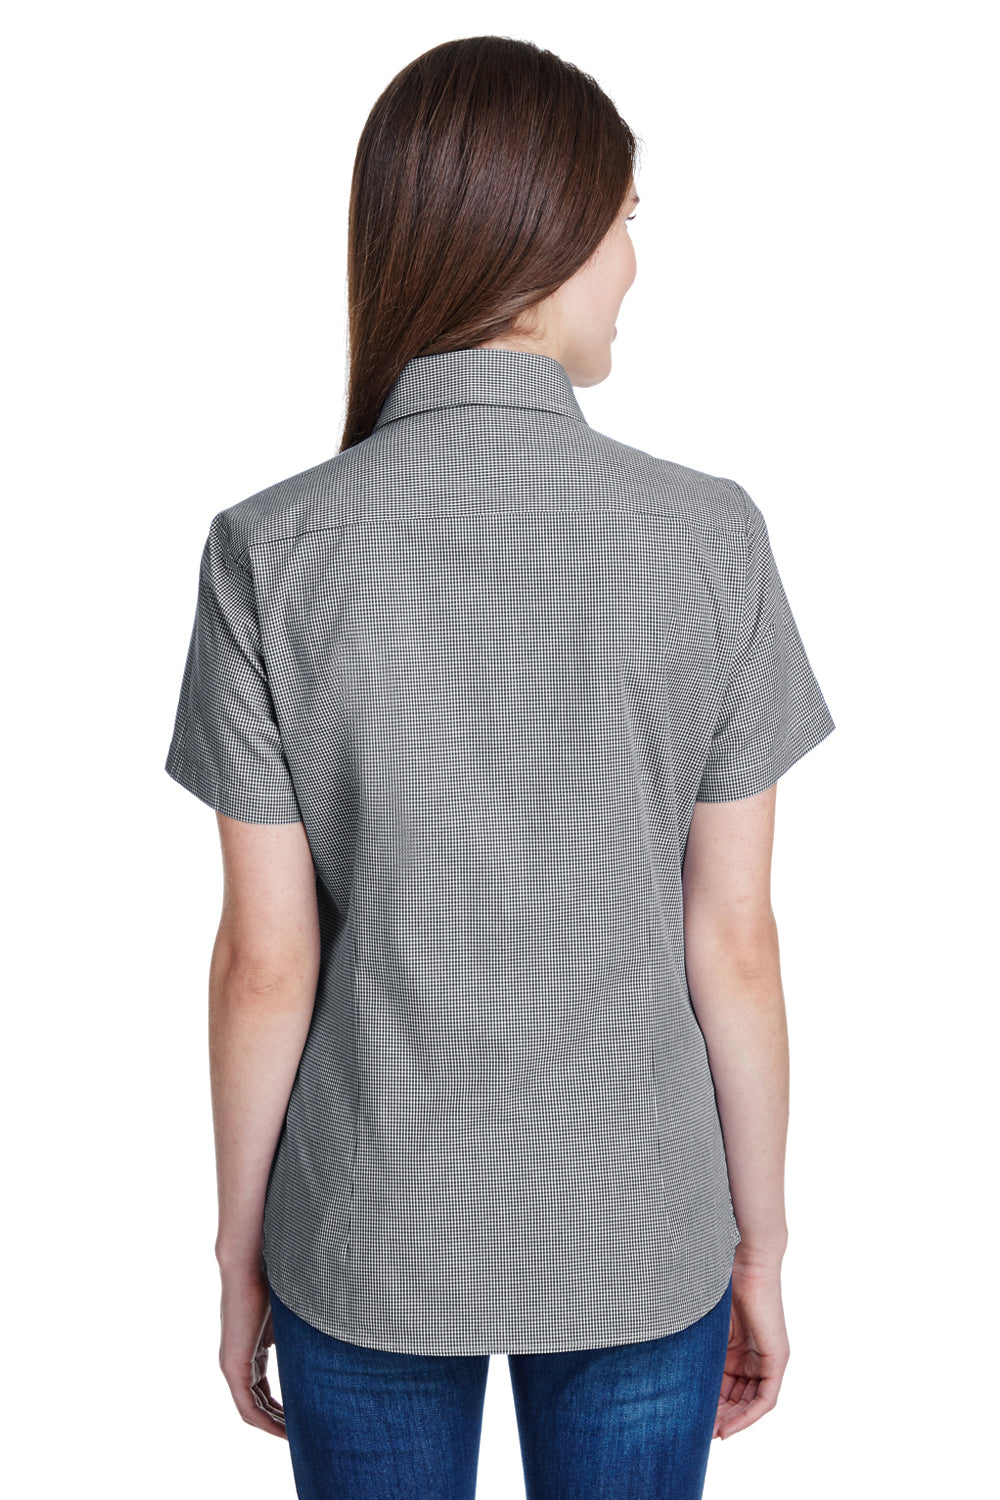 Artisan Collection RP321 Womens Microcheck Gingham Short Sleeve Button Down Shirt Black/White Model Back